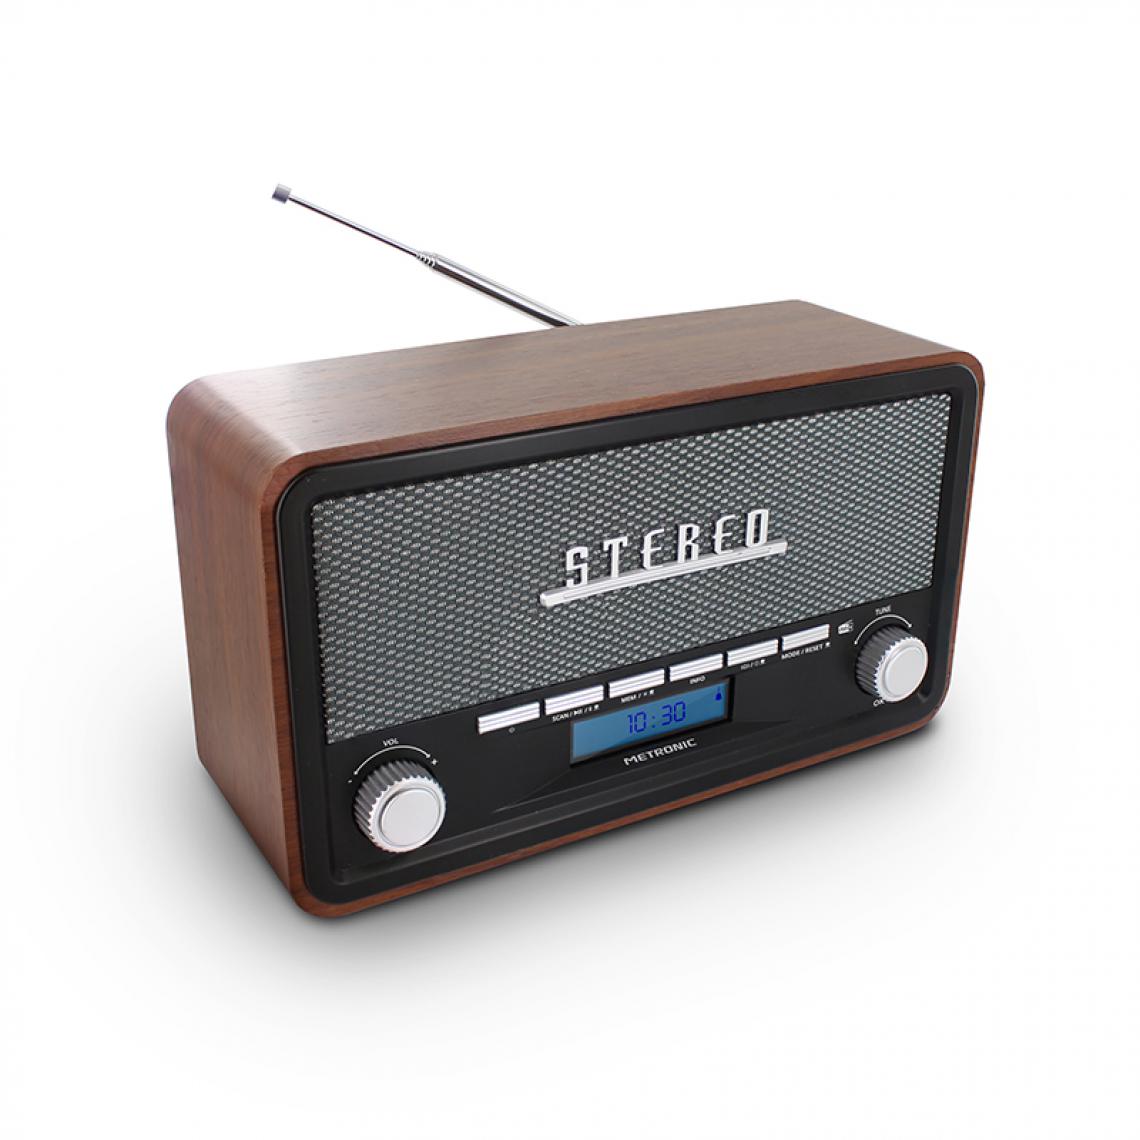 Metronic - METRONIC Radio Vintage numérique Bluetooth, DAB+ et FM RDS - 477230 - Radio